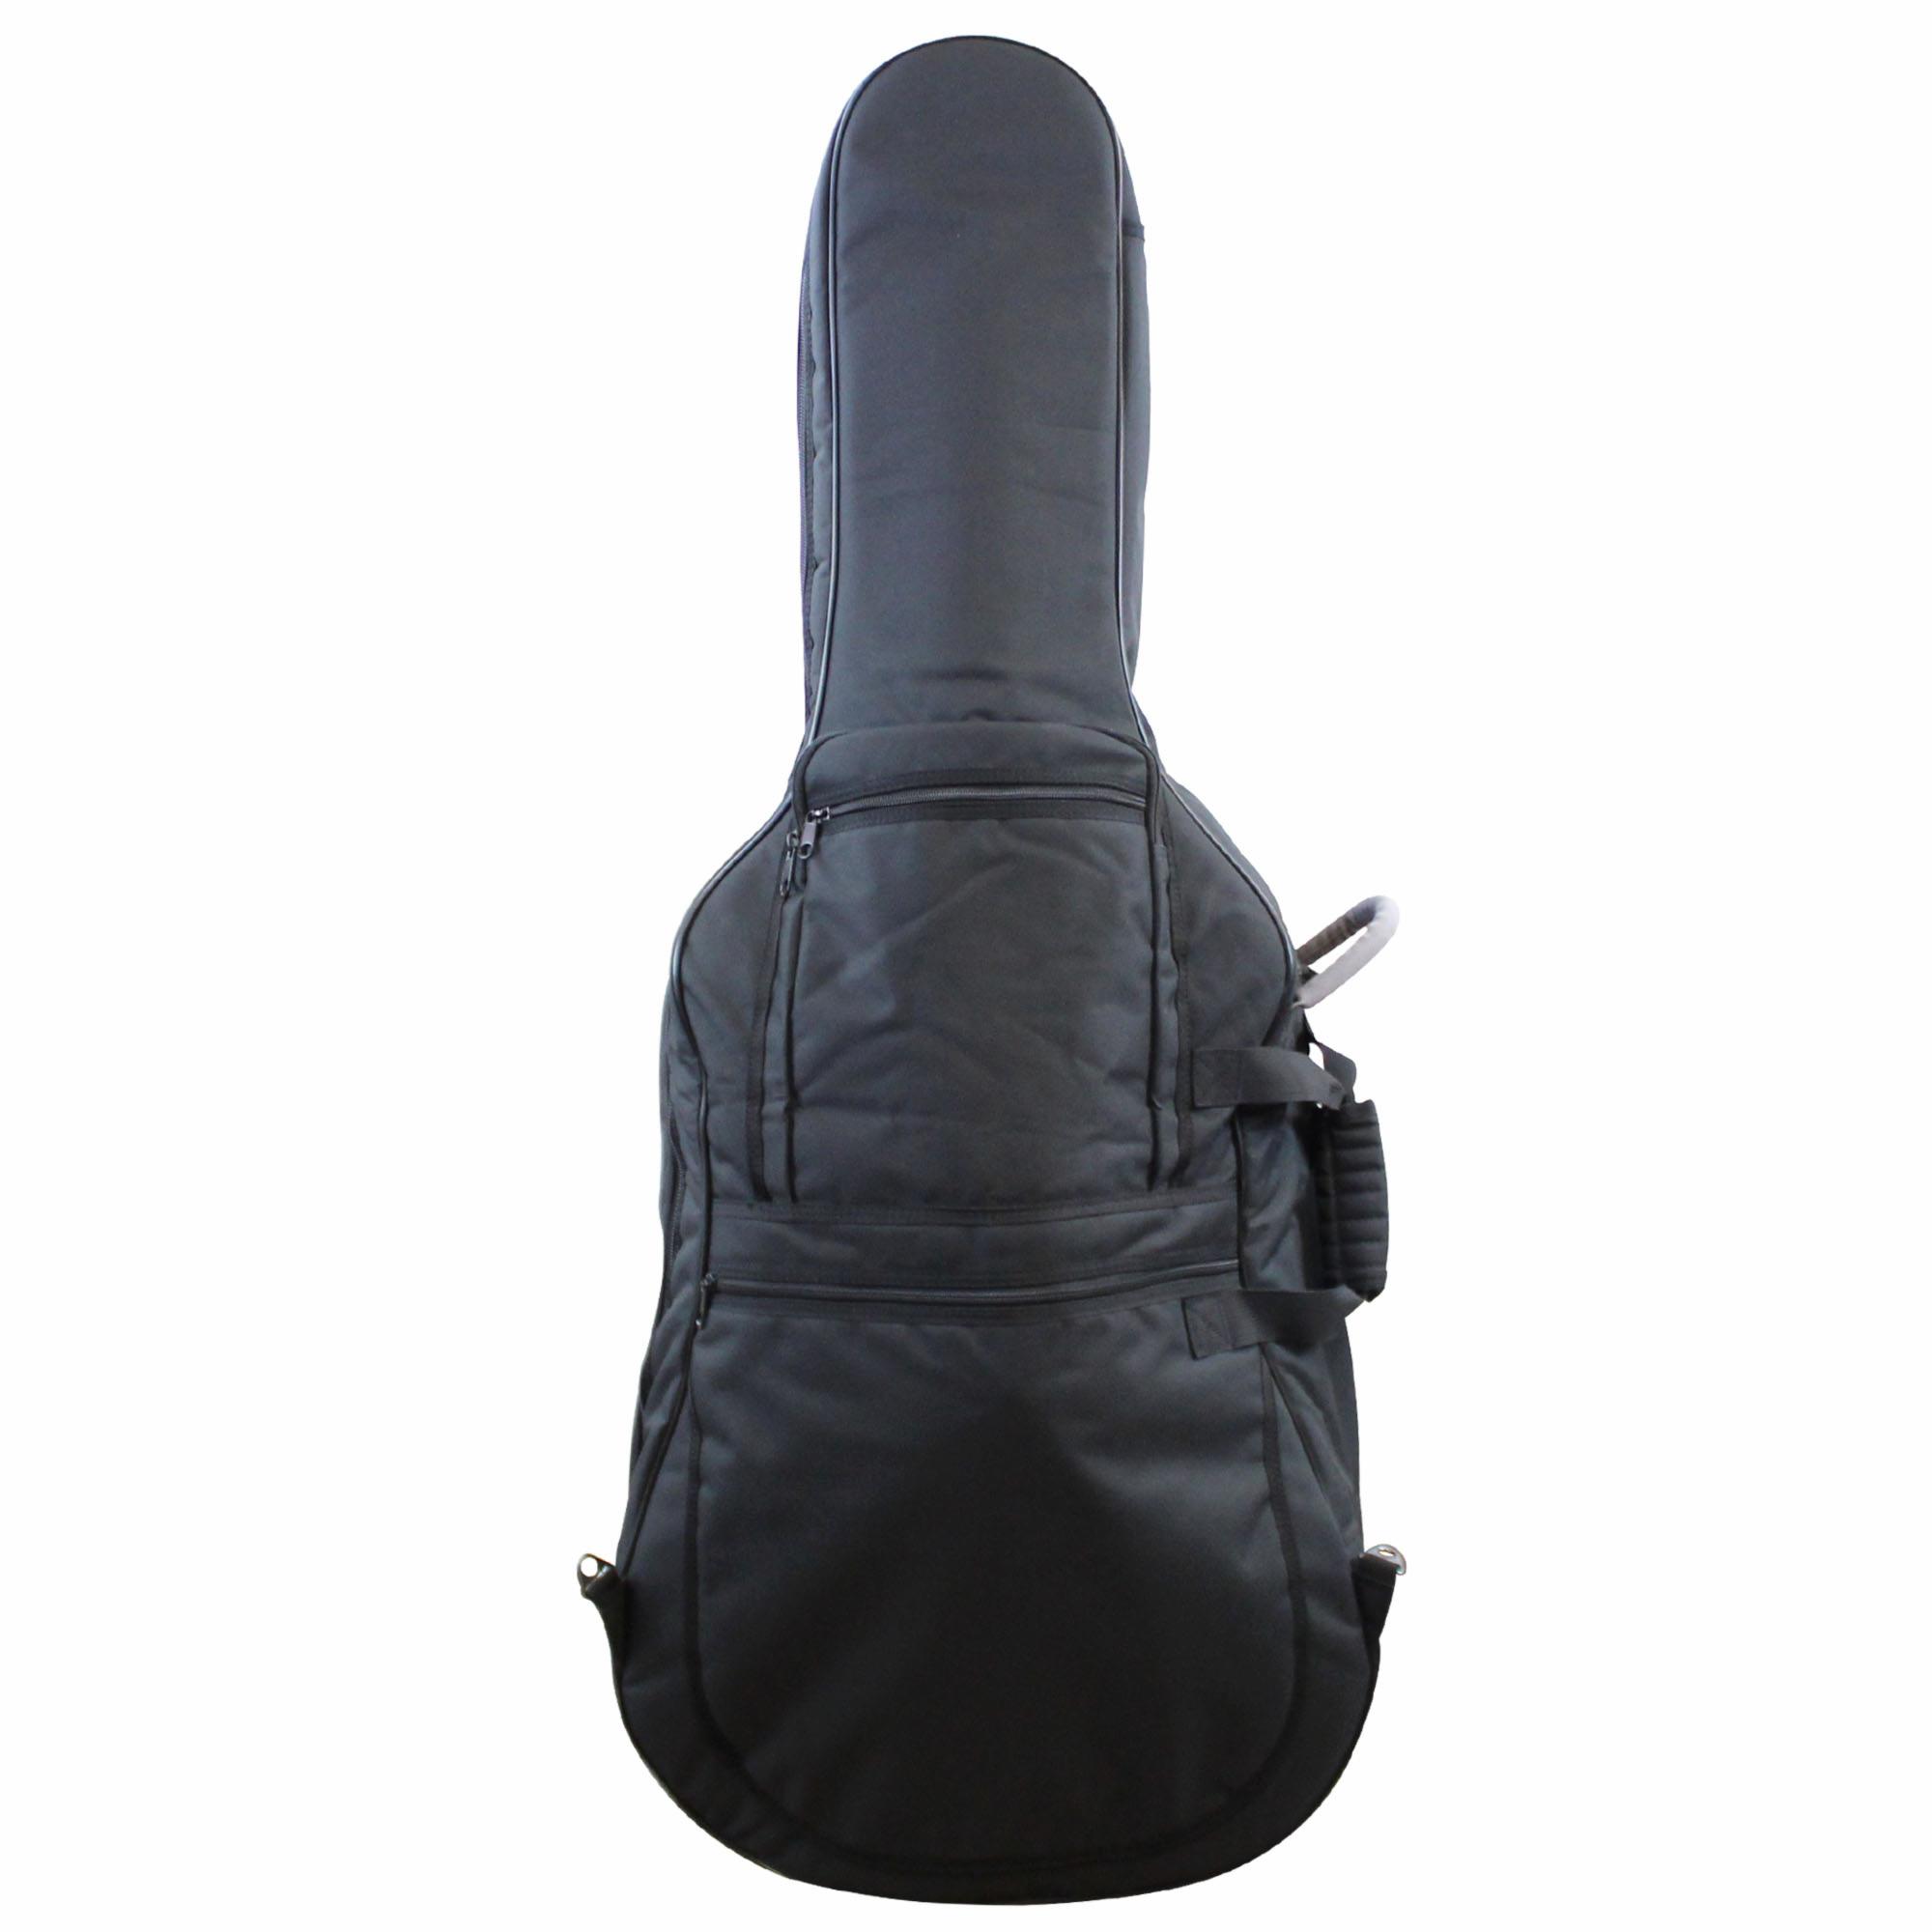 Kaces Symphony Deluxe Cello Bag 20mm